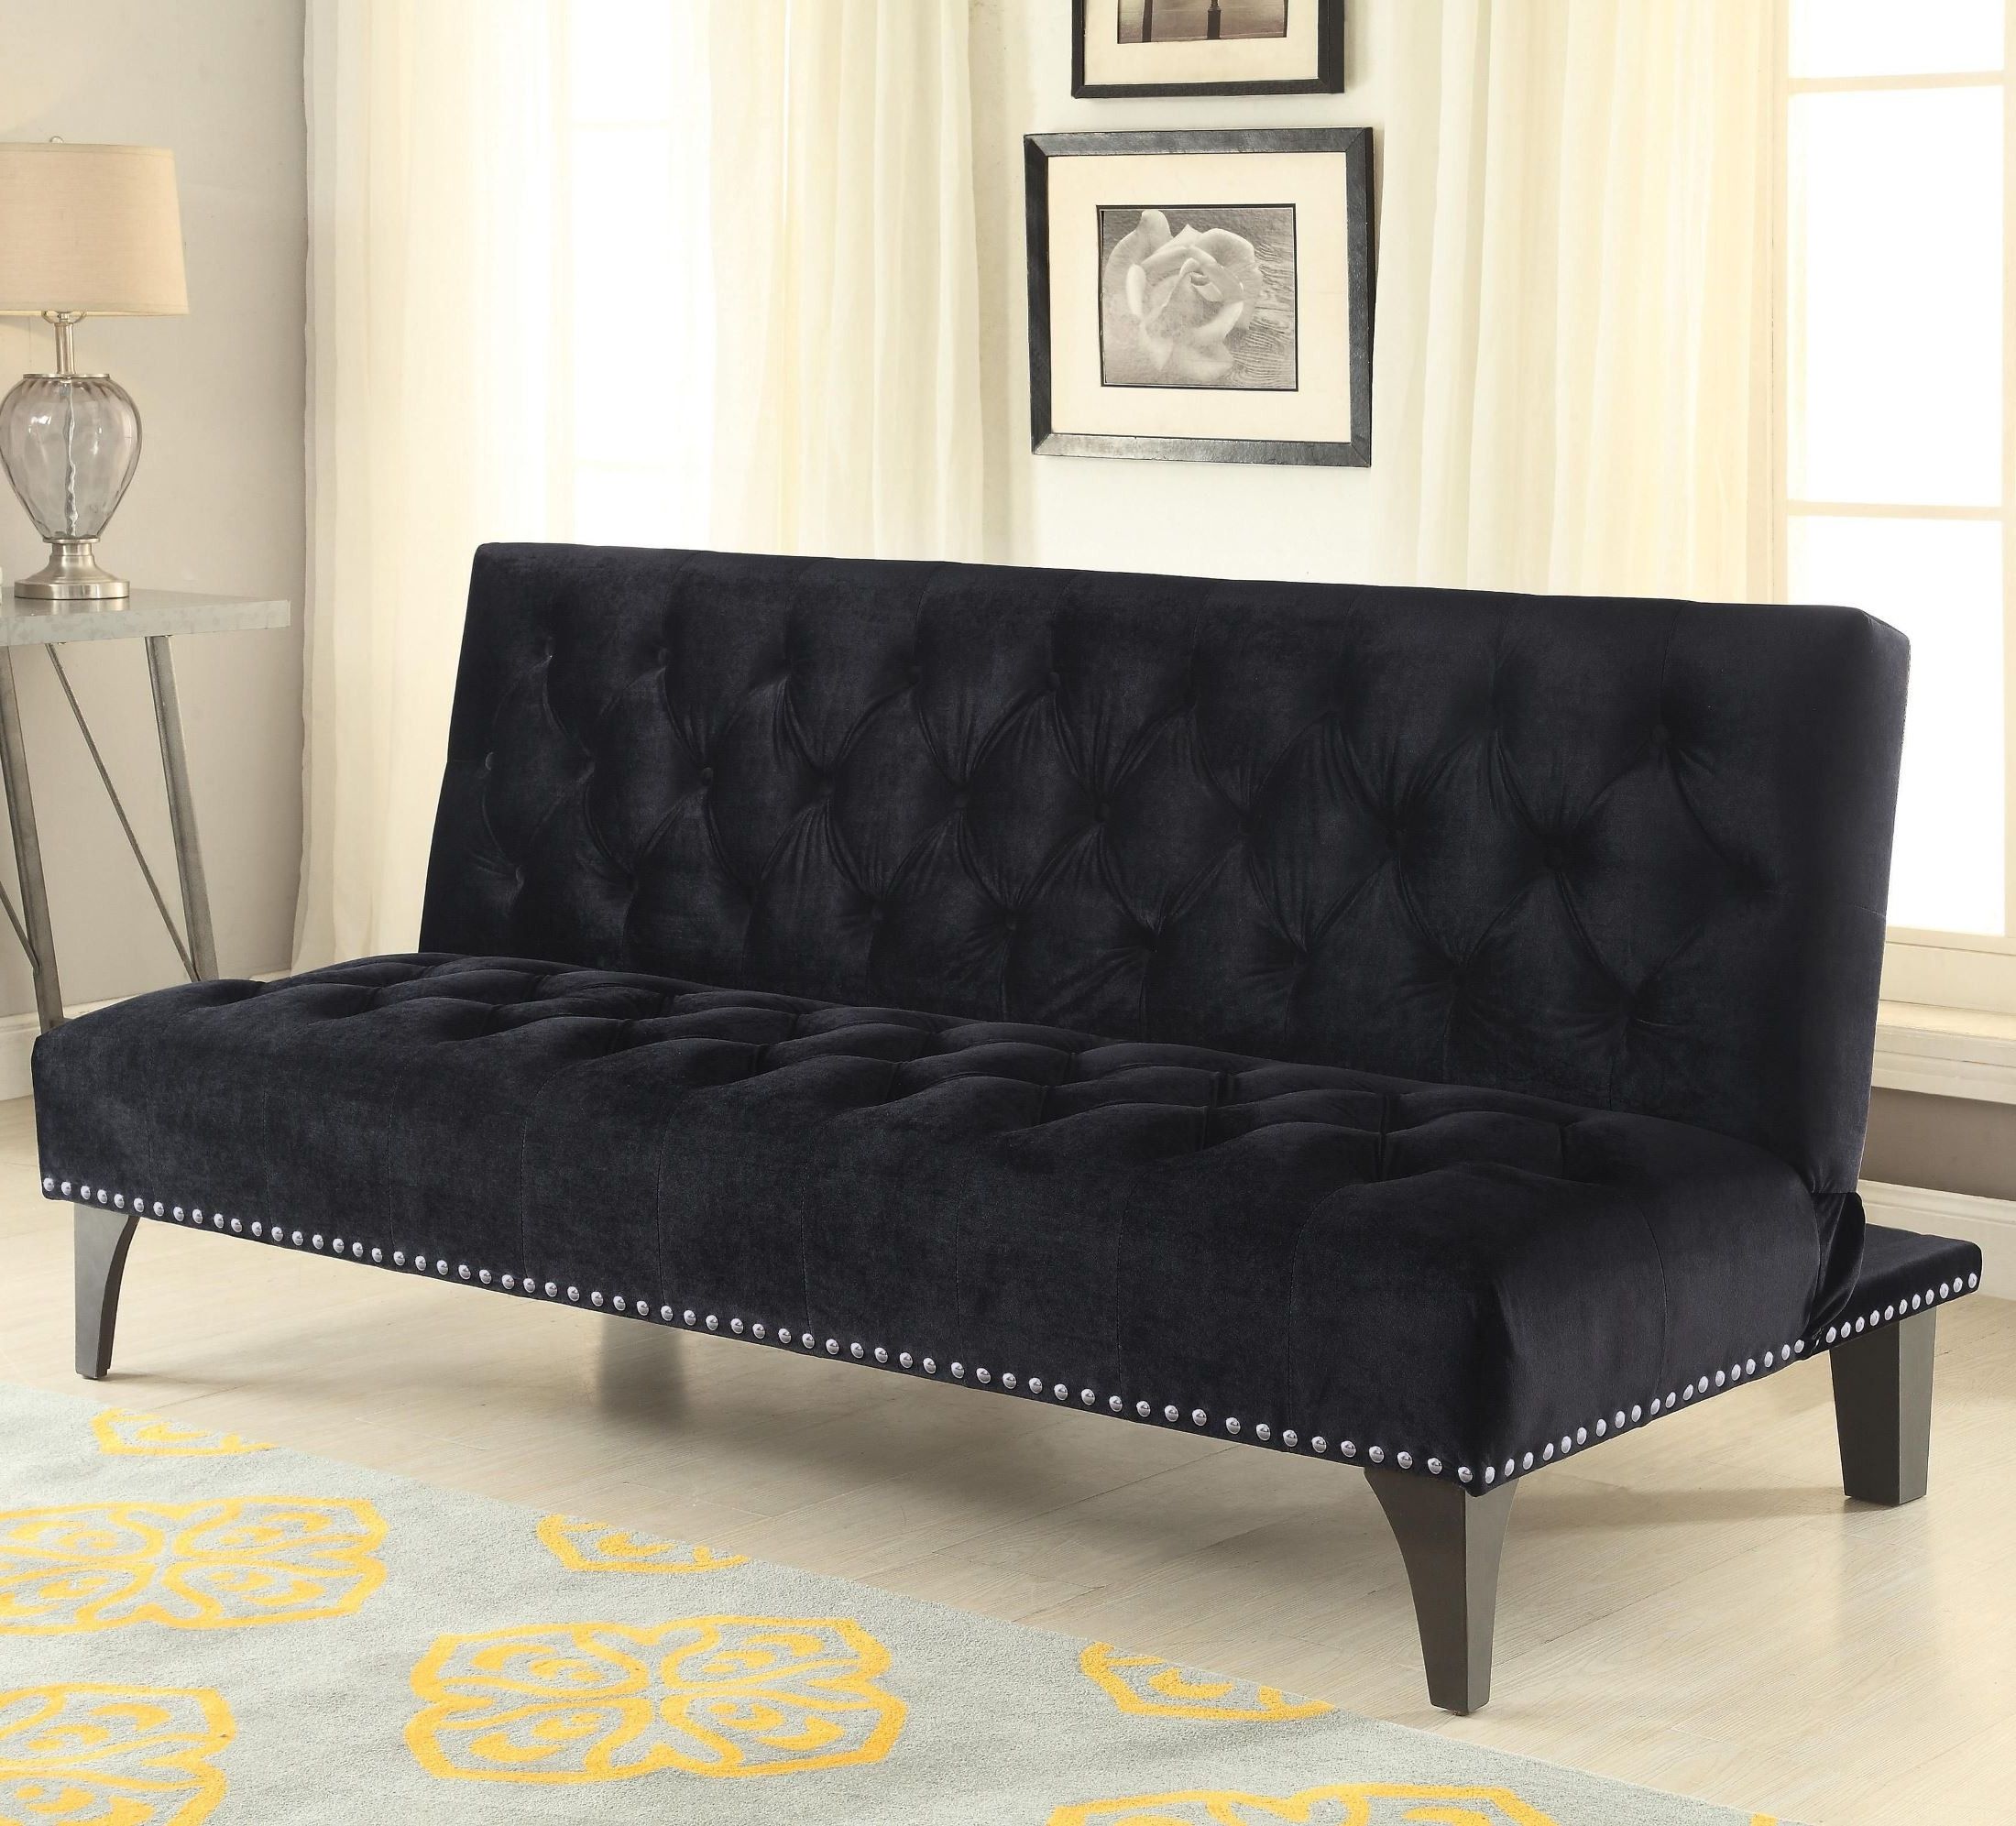 500237 Black Velvet Upholstery Sofa Bed From Coaster (500237) (View 7 of 15)